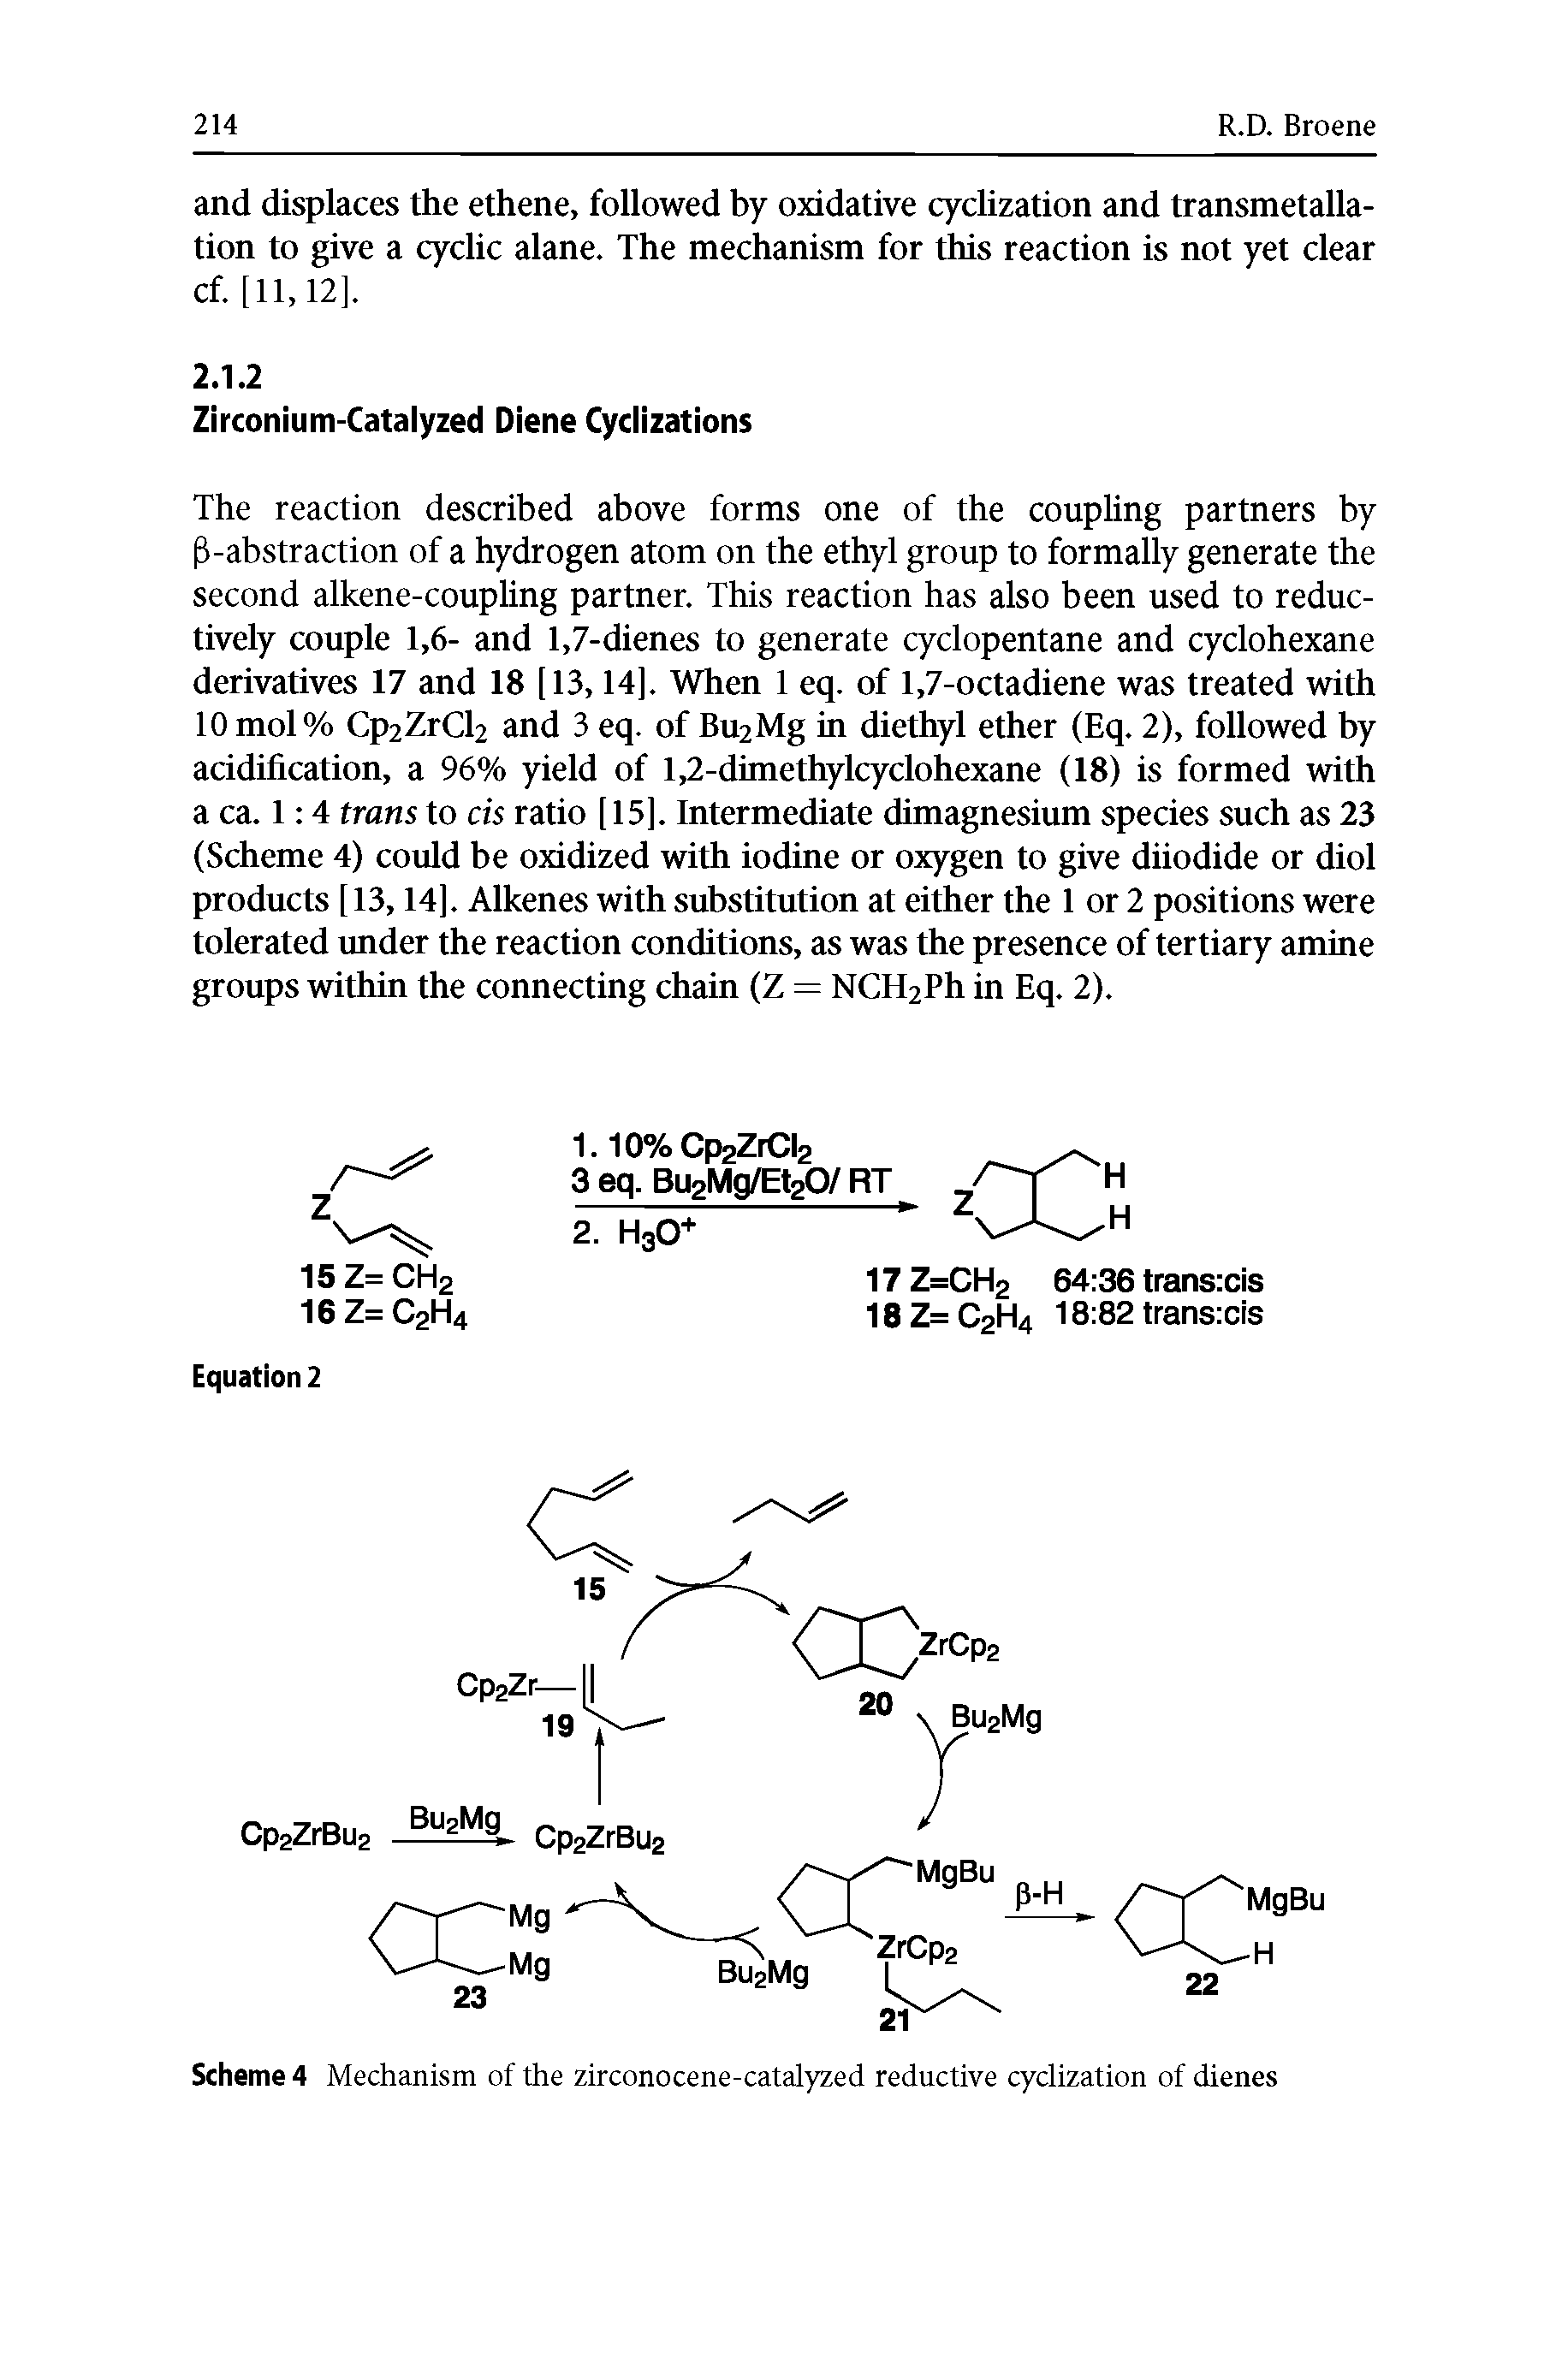 Scheme 4 Mechanism of the zirconocene-catalyzed reductive cyclization of dienes...